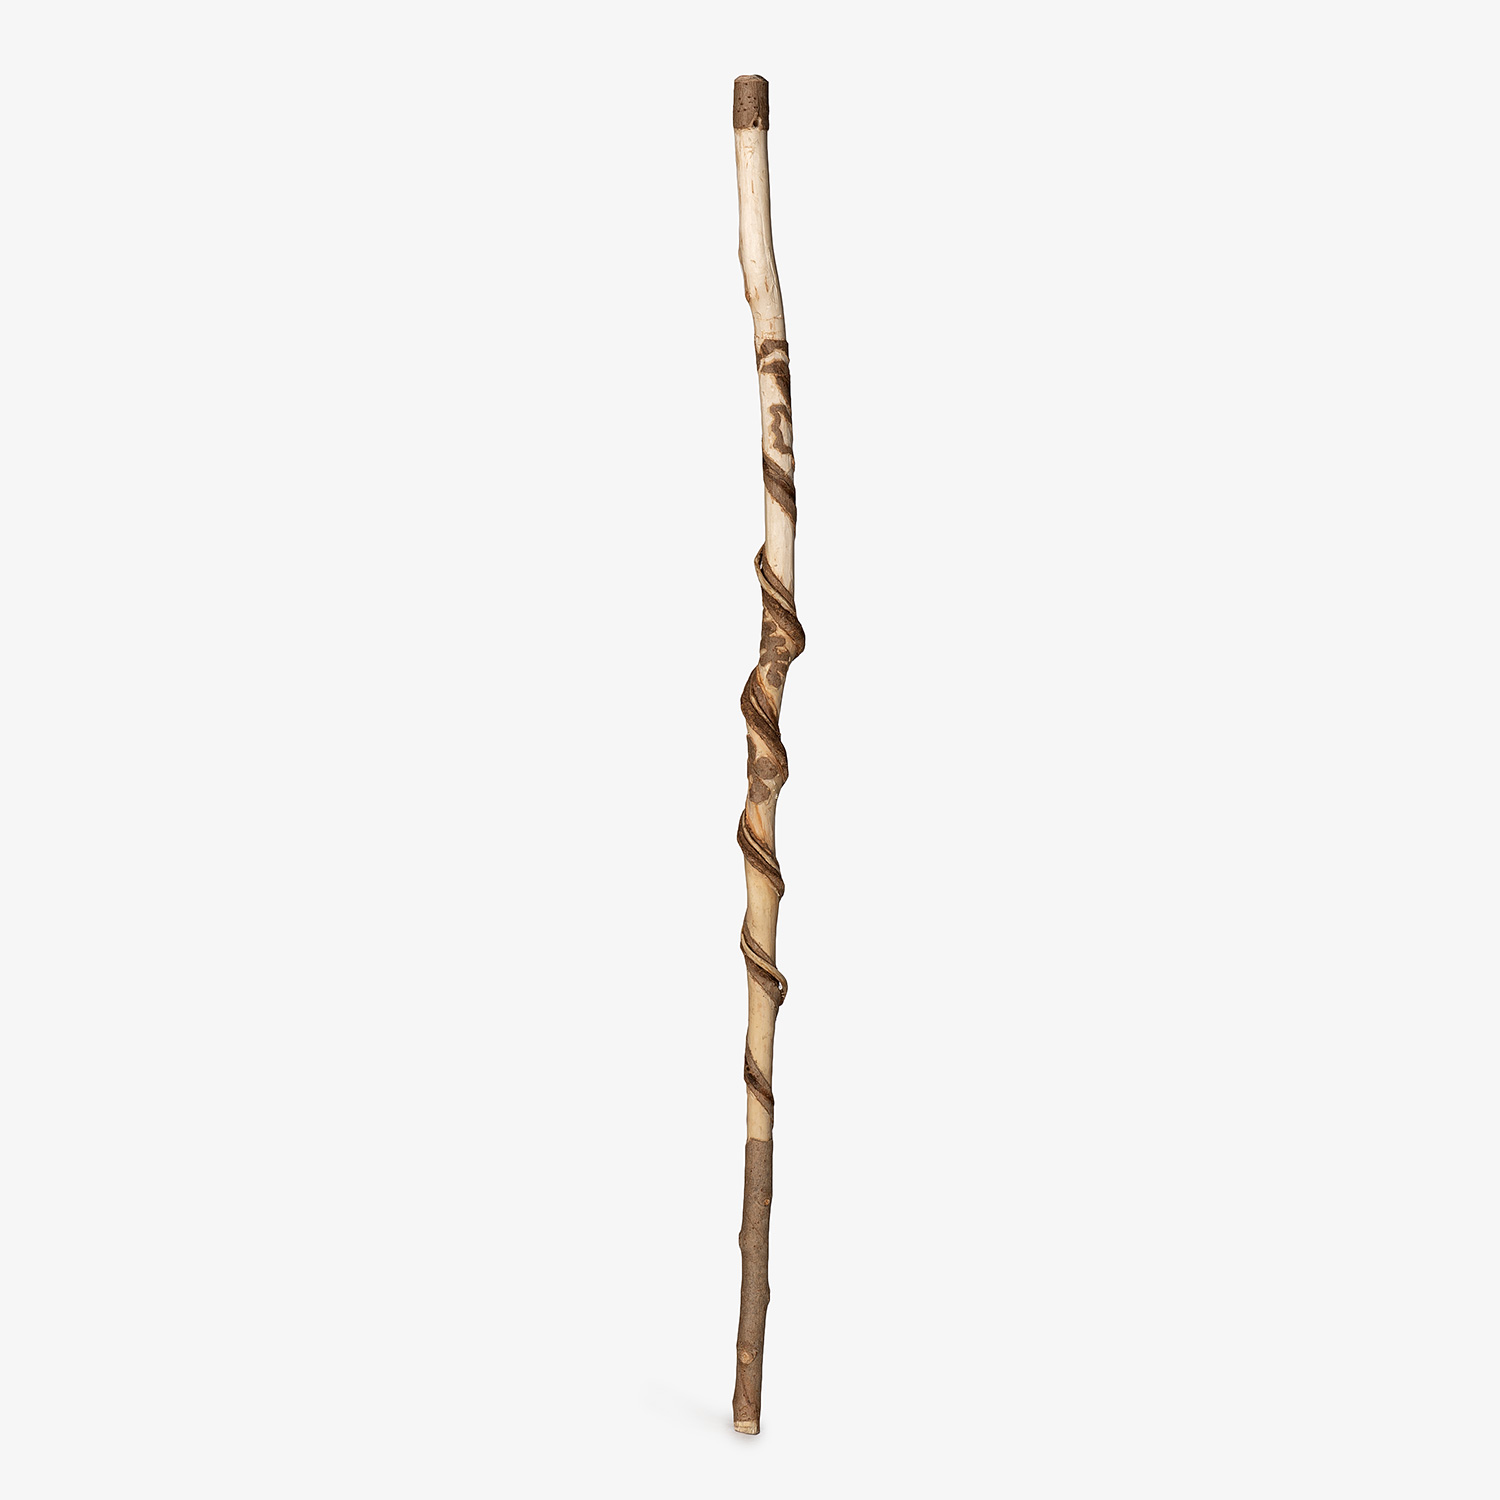 Hiking stick, 134 cm length